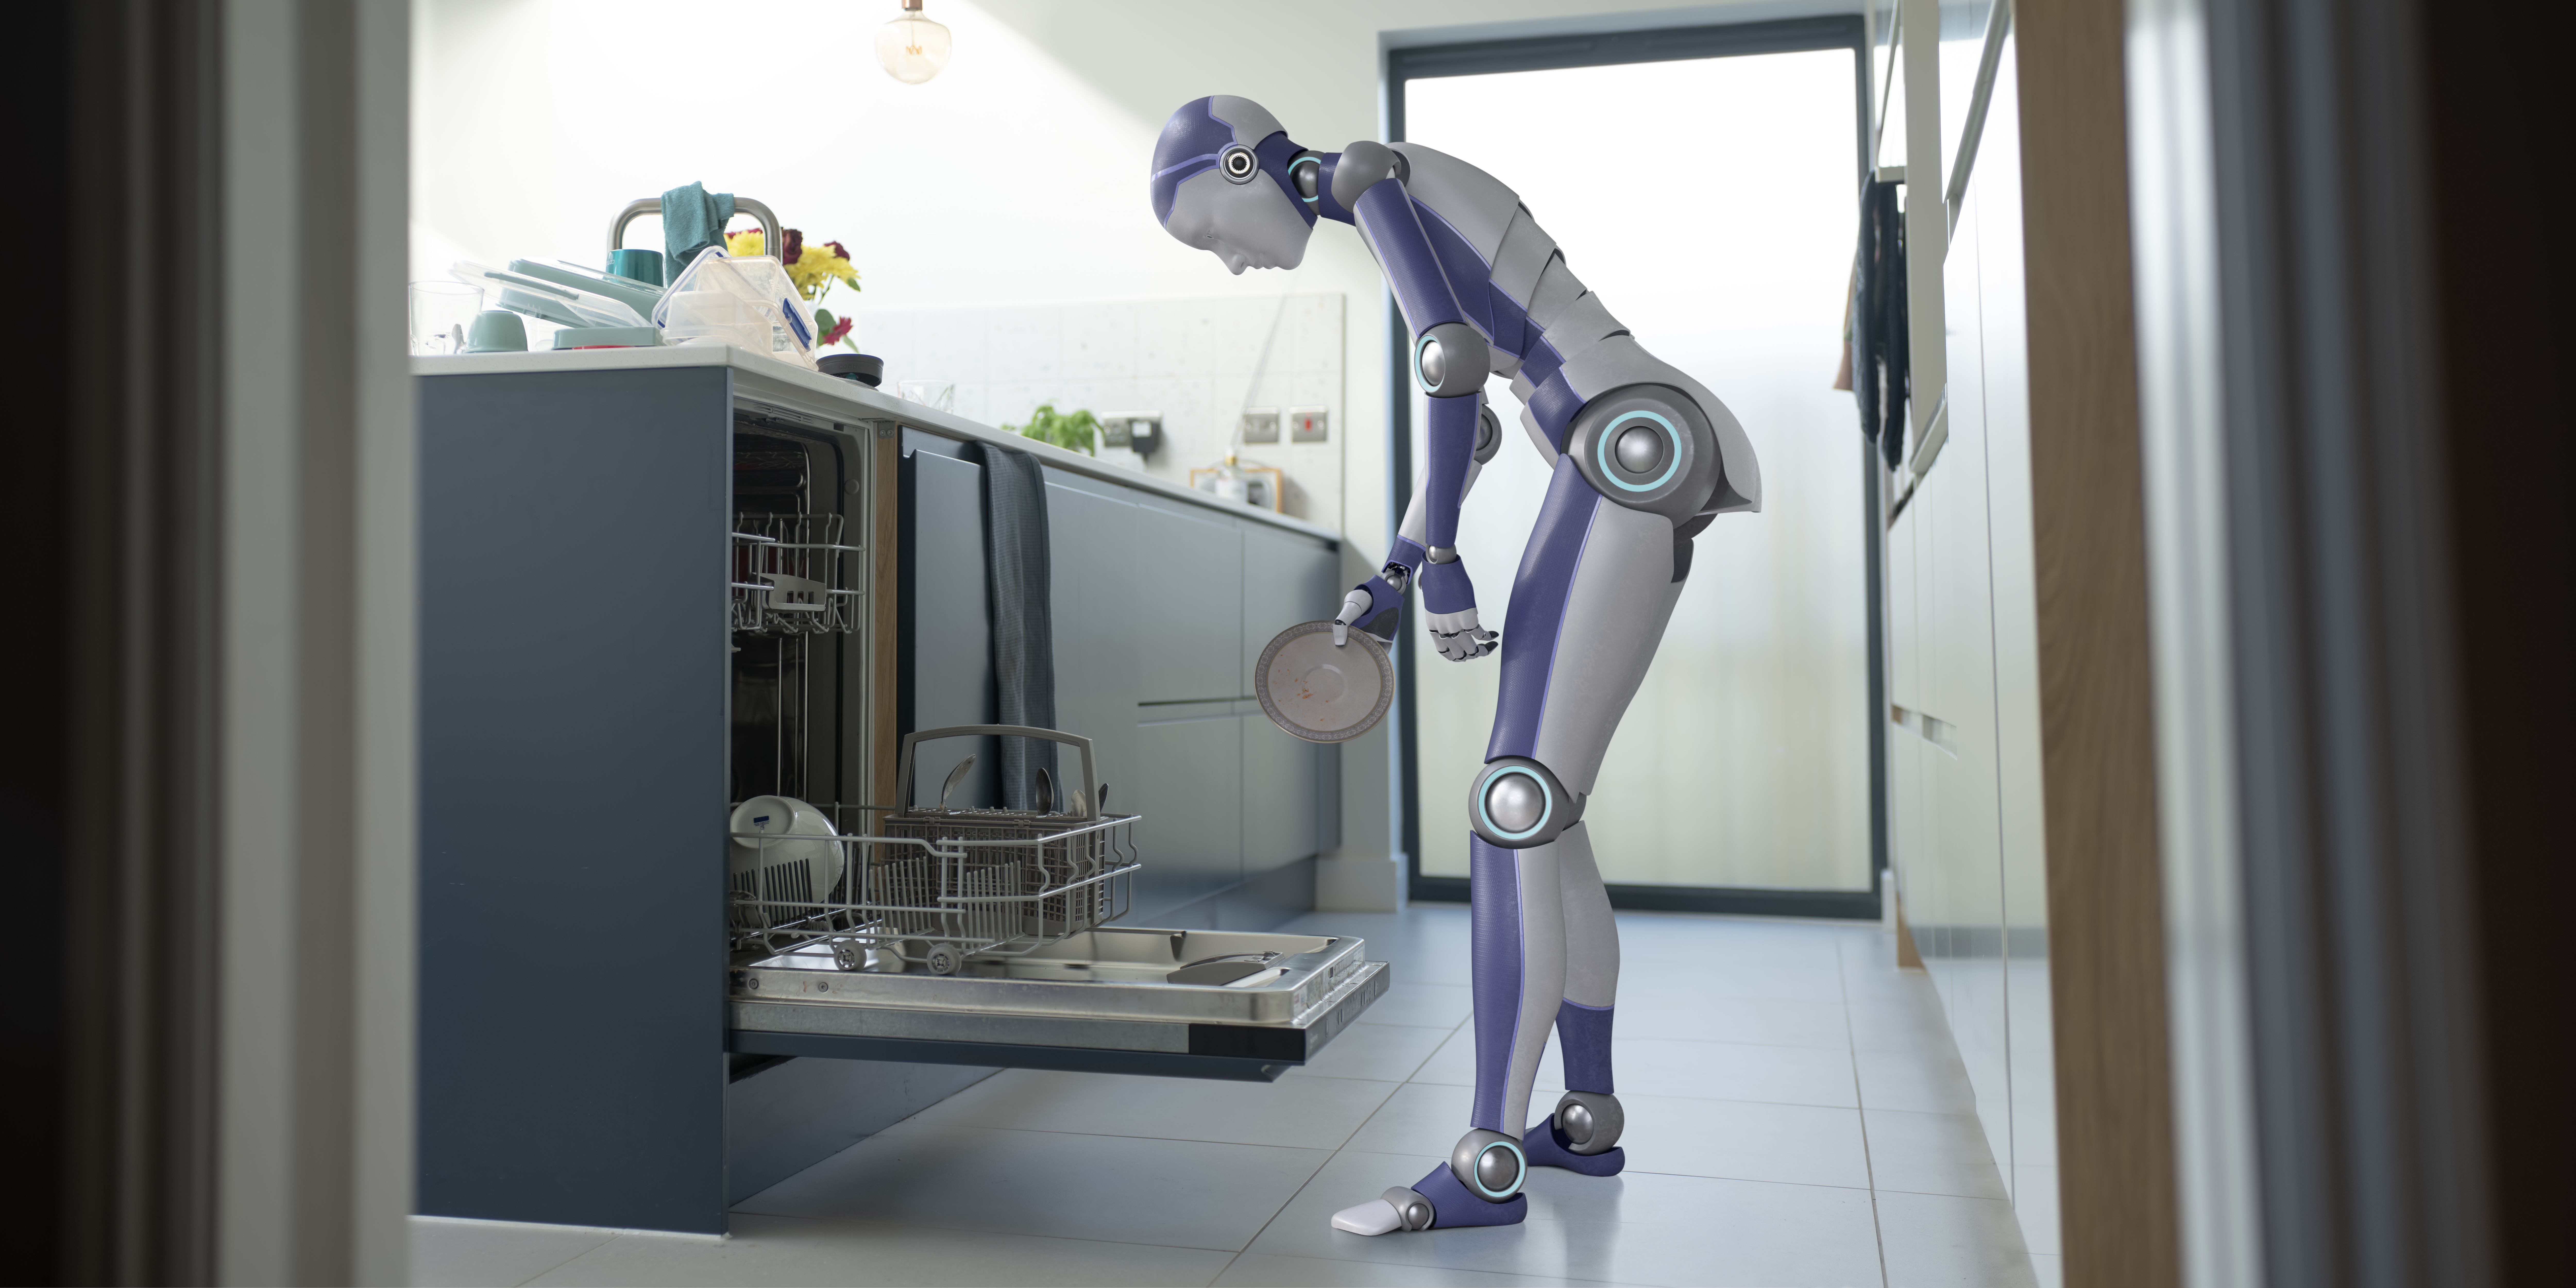 Kitchen robots could be the next big advancement.